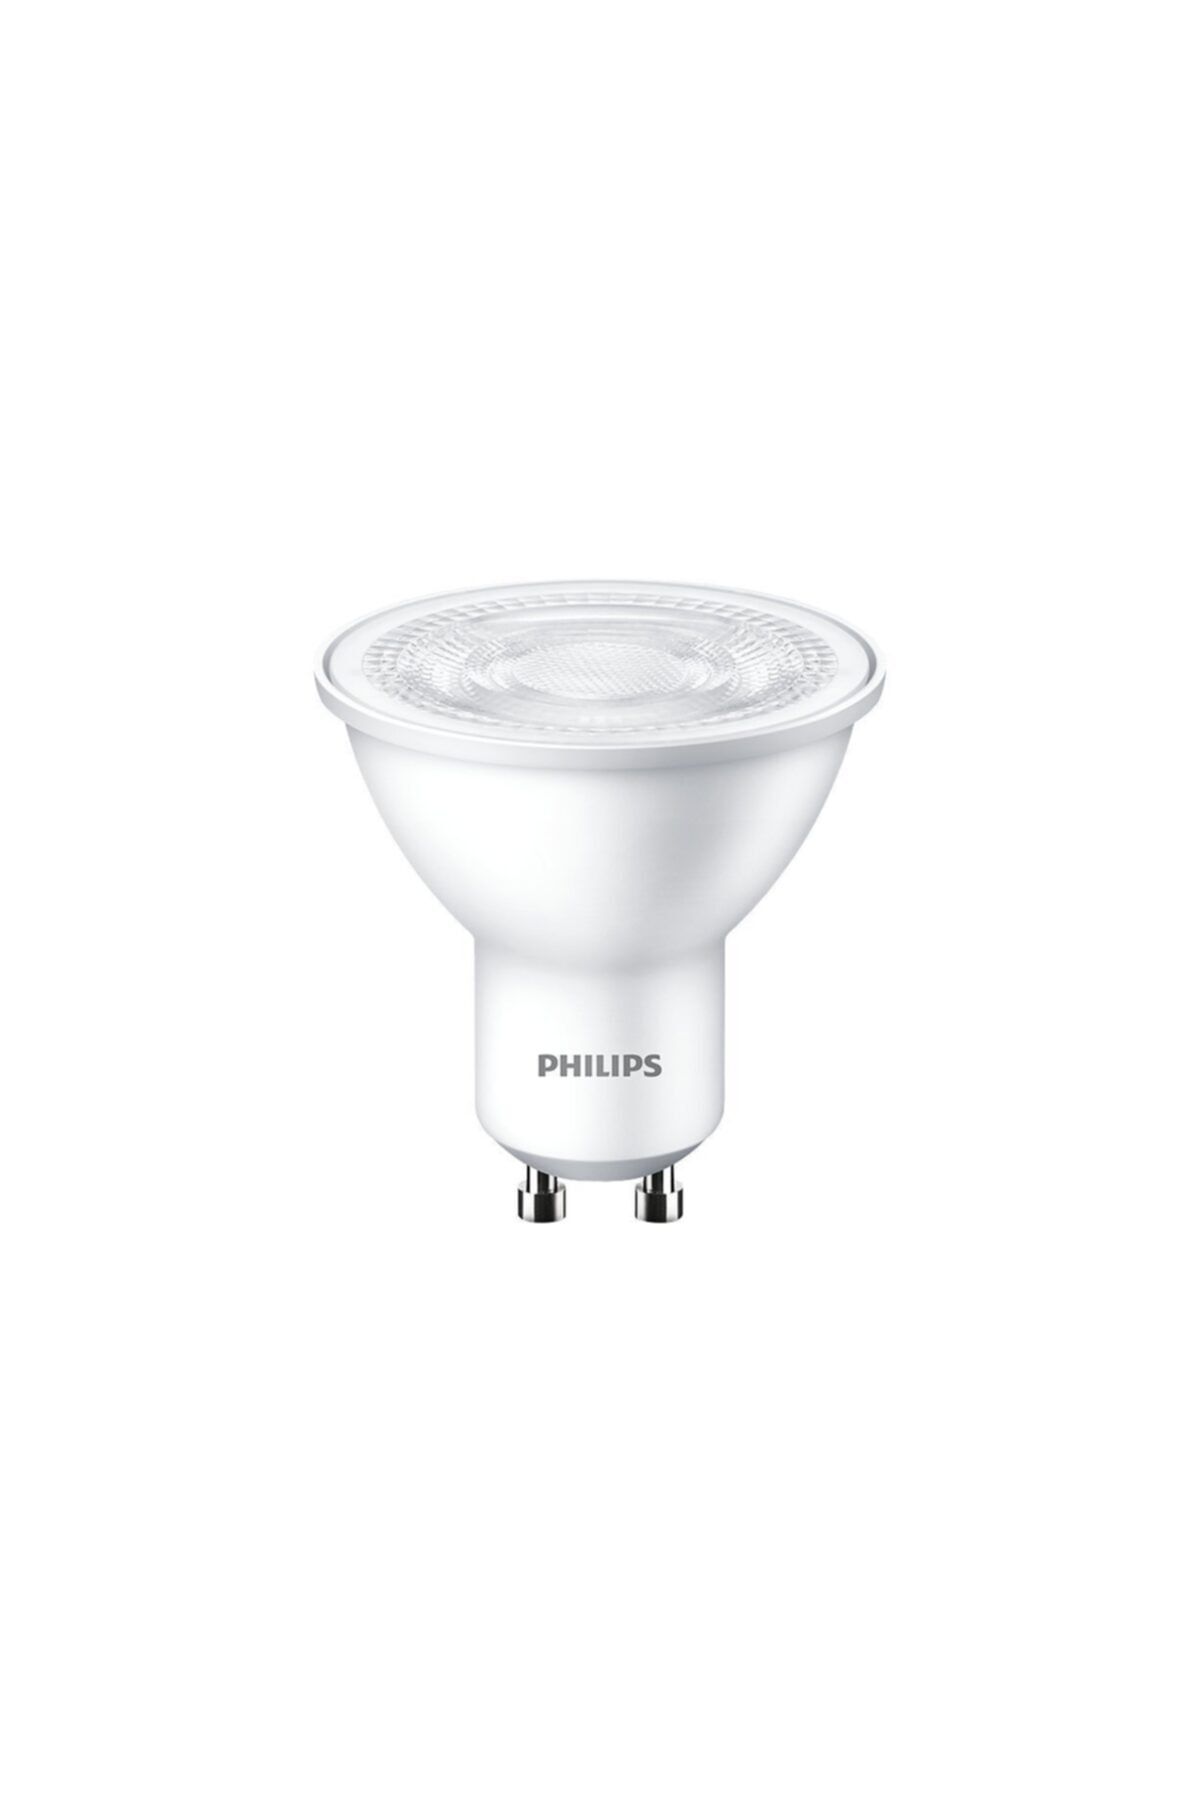 Philips 3 Adet Phılıps 4.7w=50w 345 Lümen Gu 10 Led Spot 2700kelvin Sarı